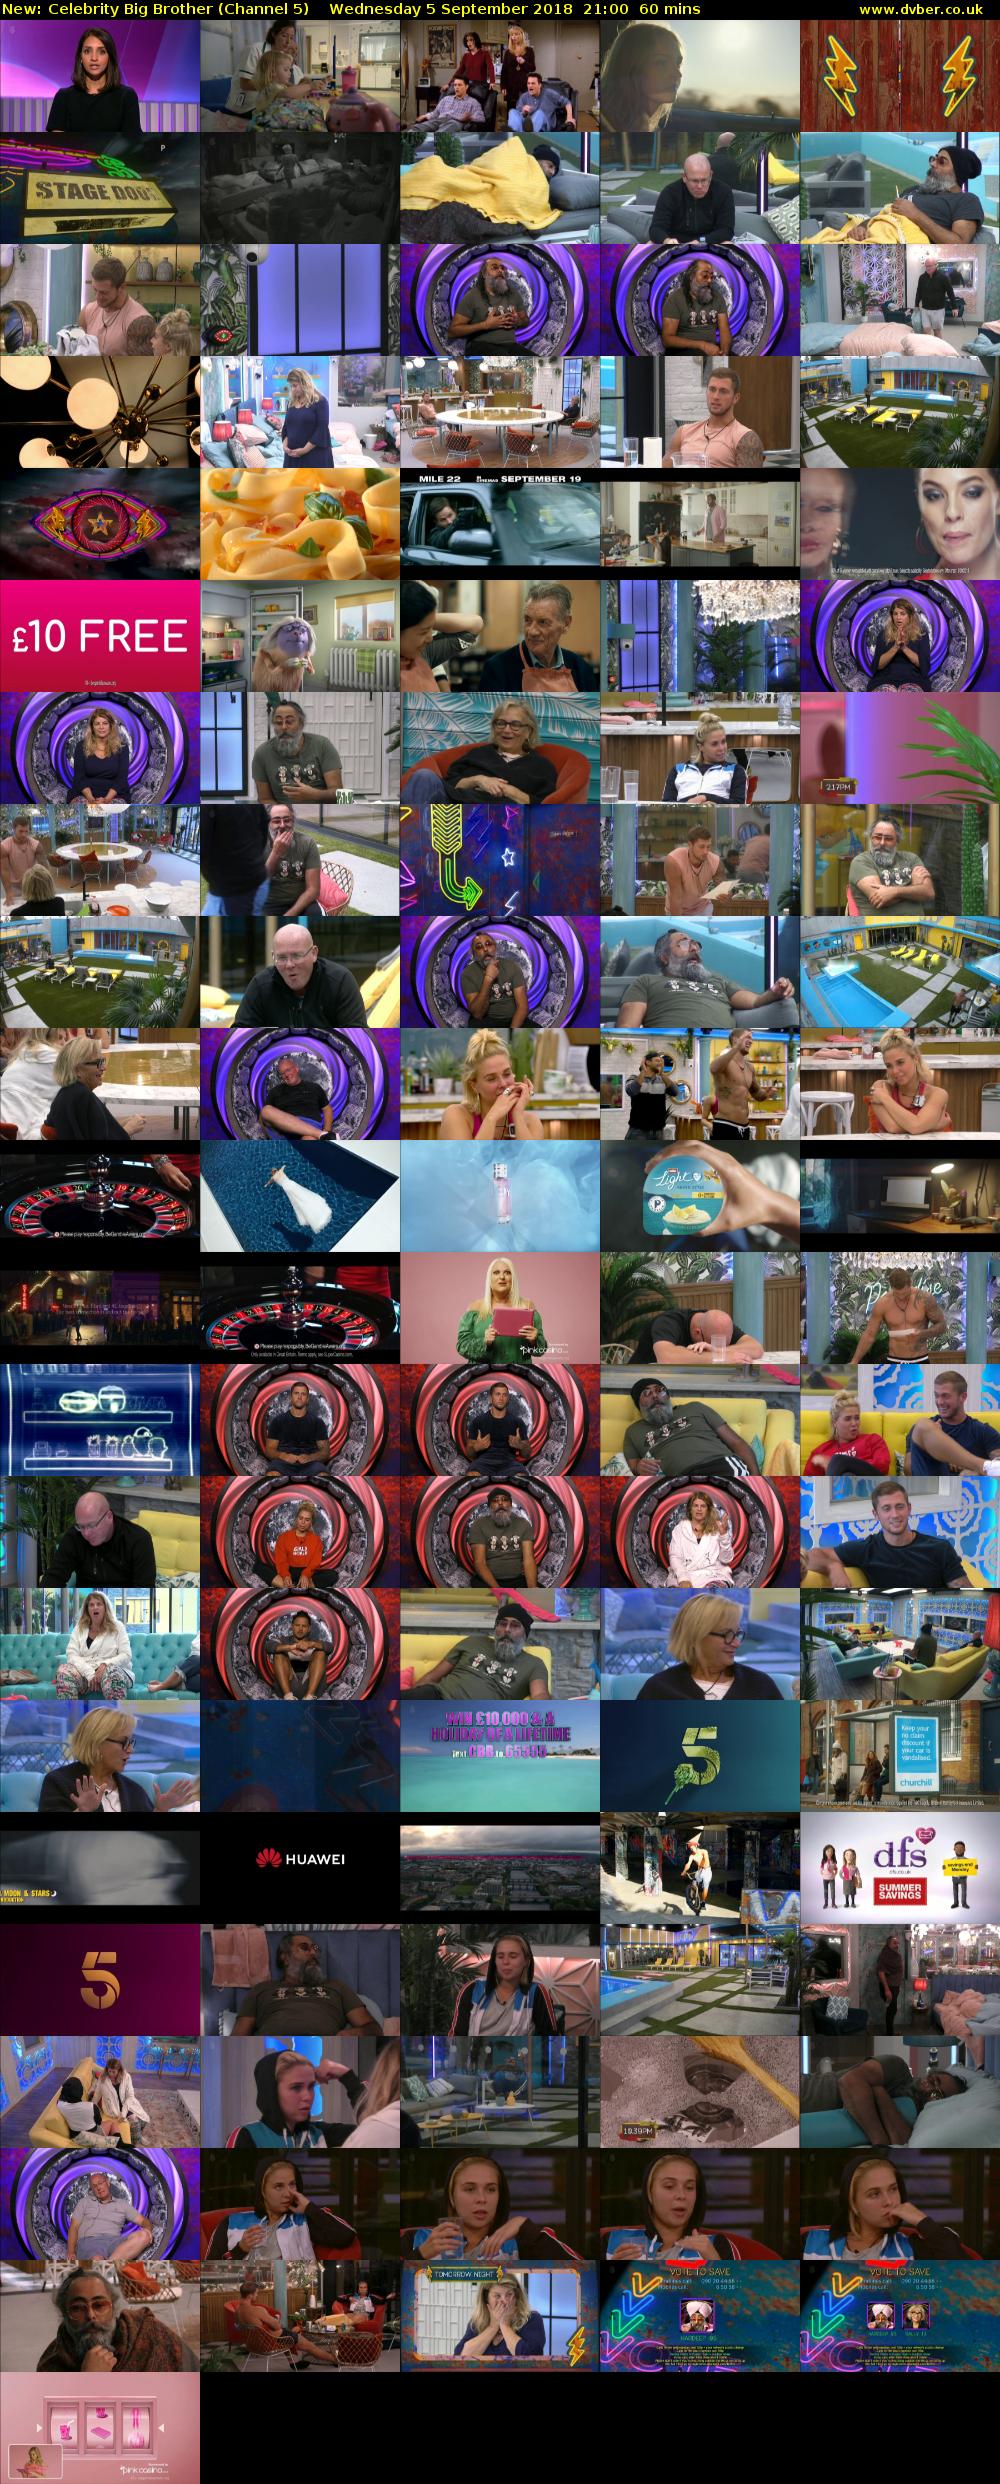 Celebrity Big Brother (Channel 5) Wednesday 5 September 2018 21:00 - 22:00